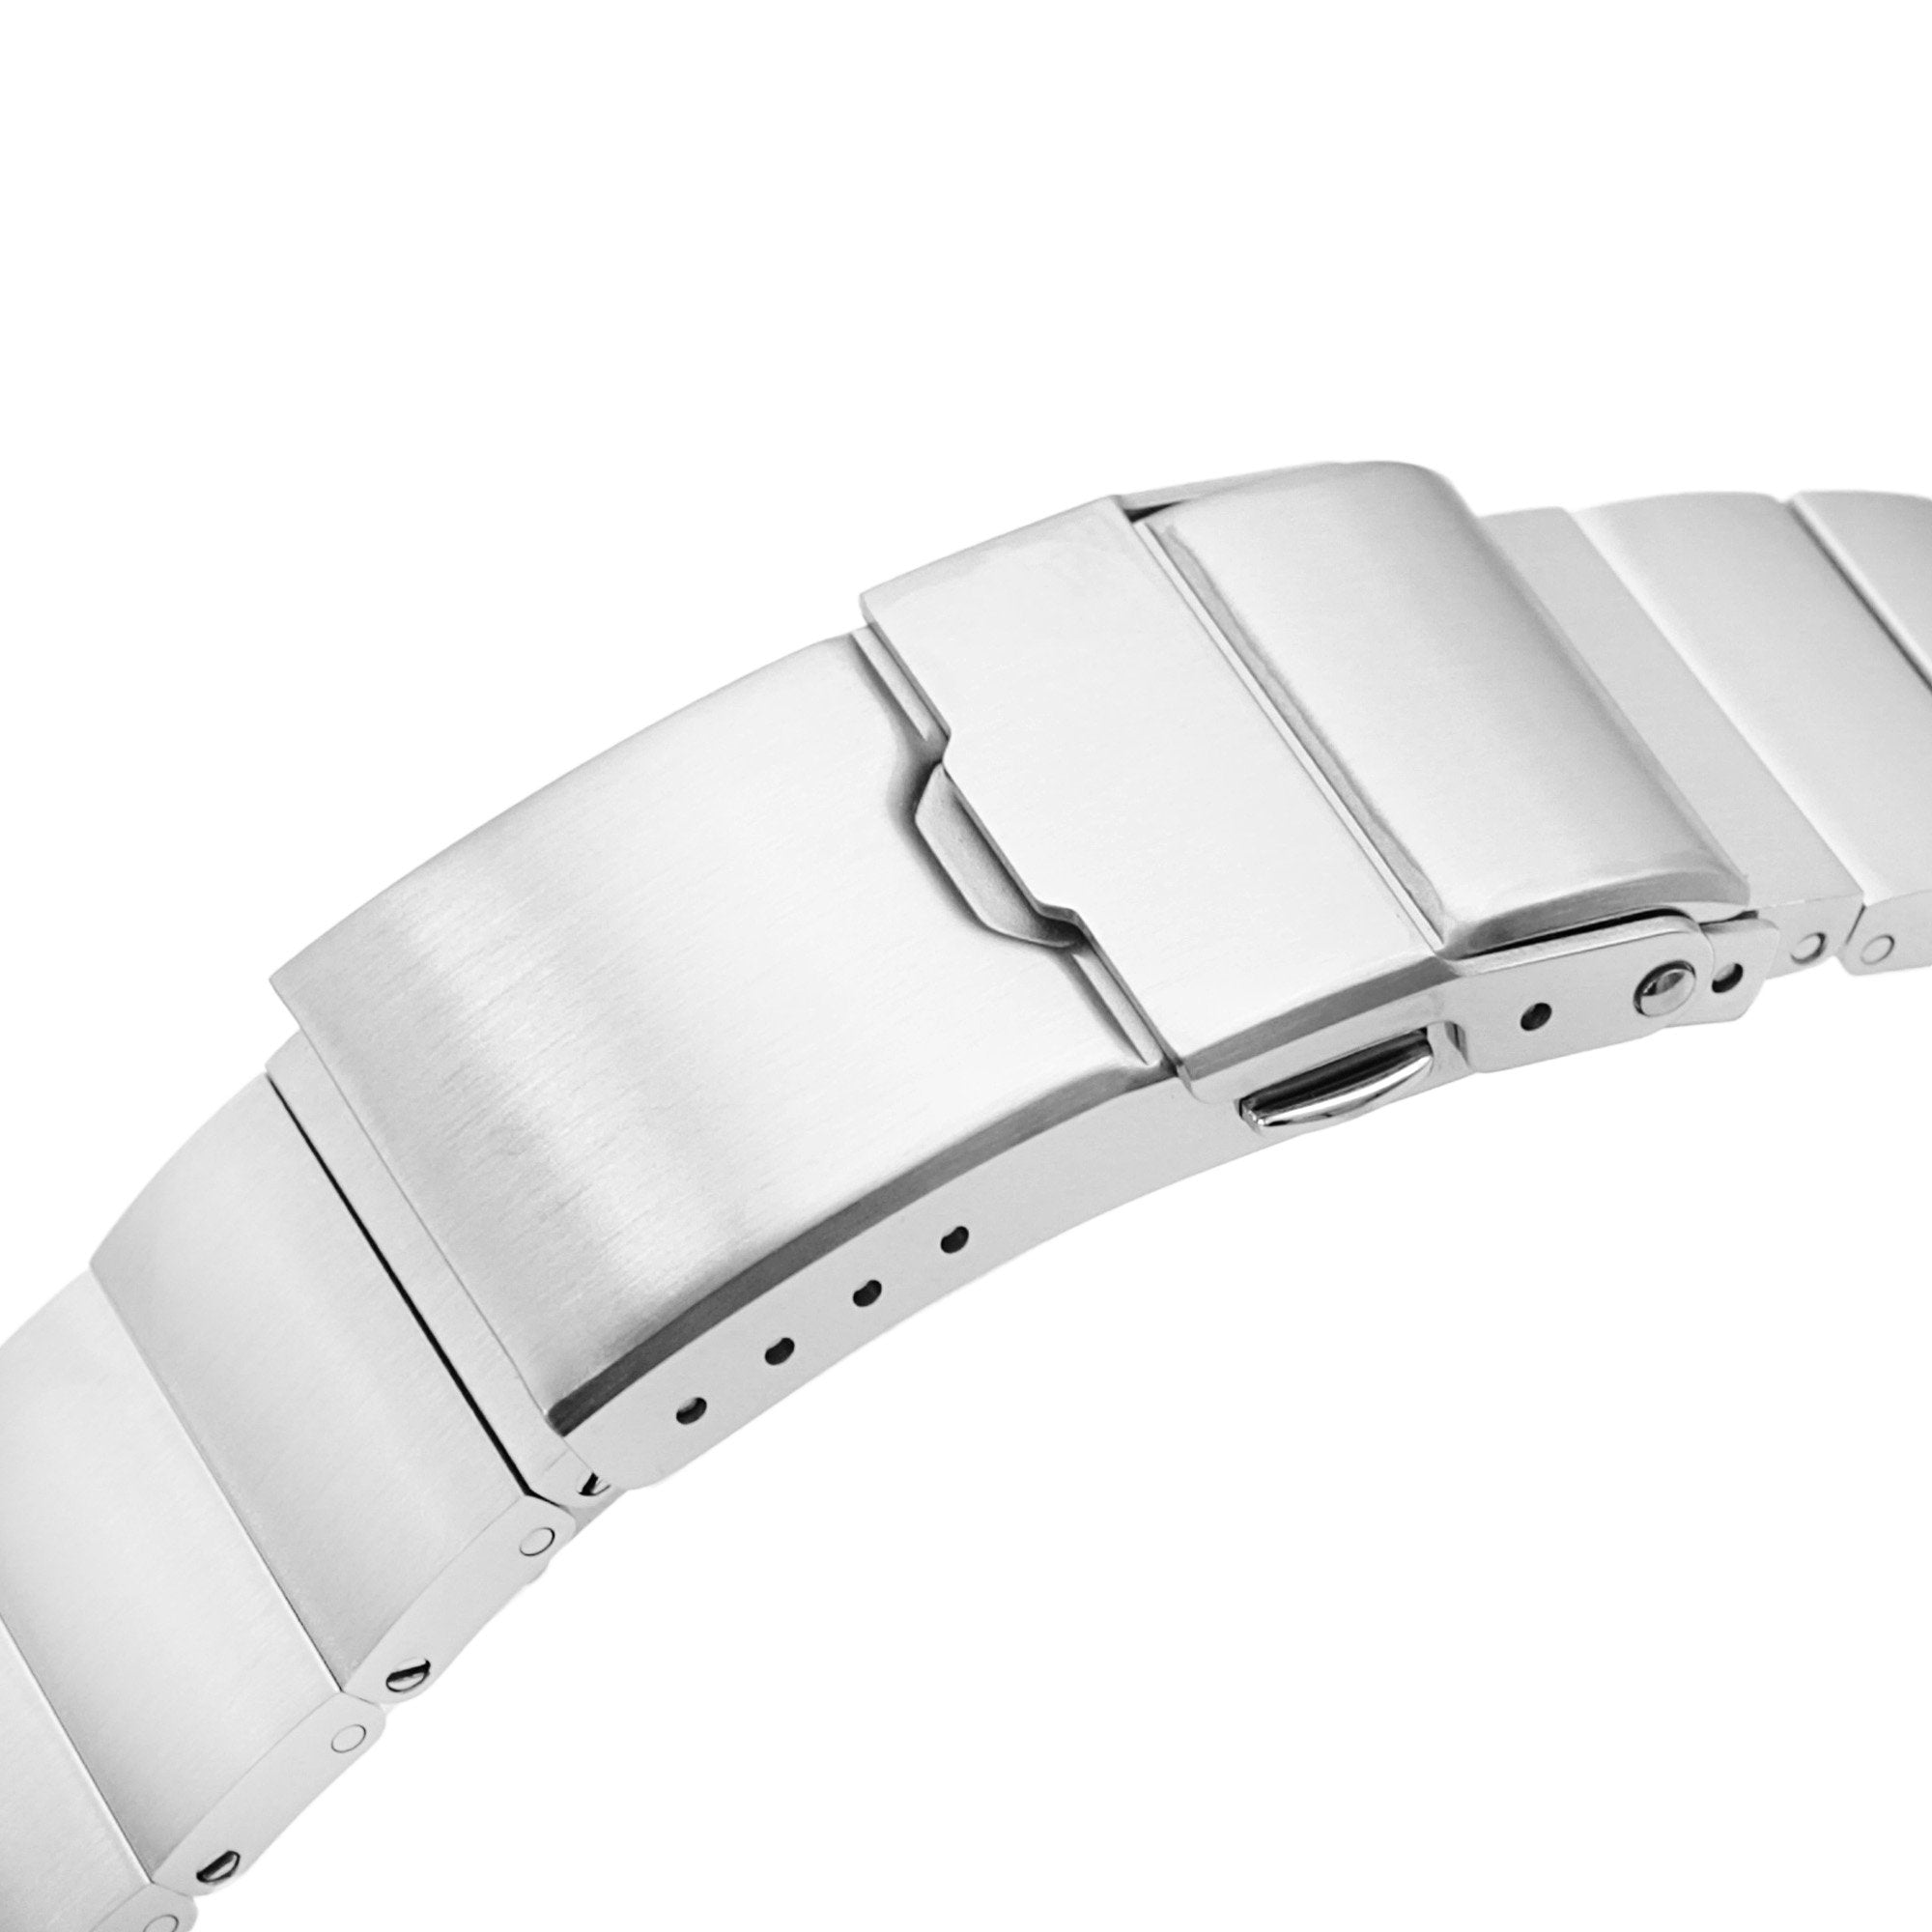 Strapcode Stainless Steel Bracelet for Orient Kamasu #SS221820B113